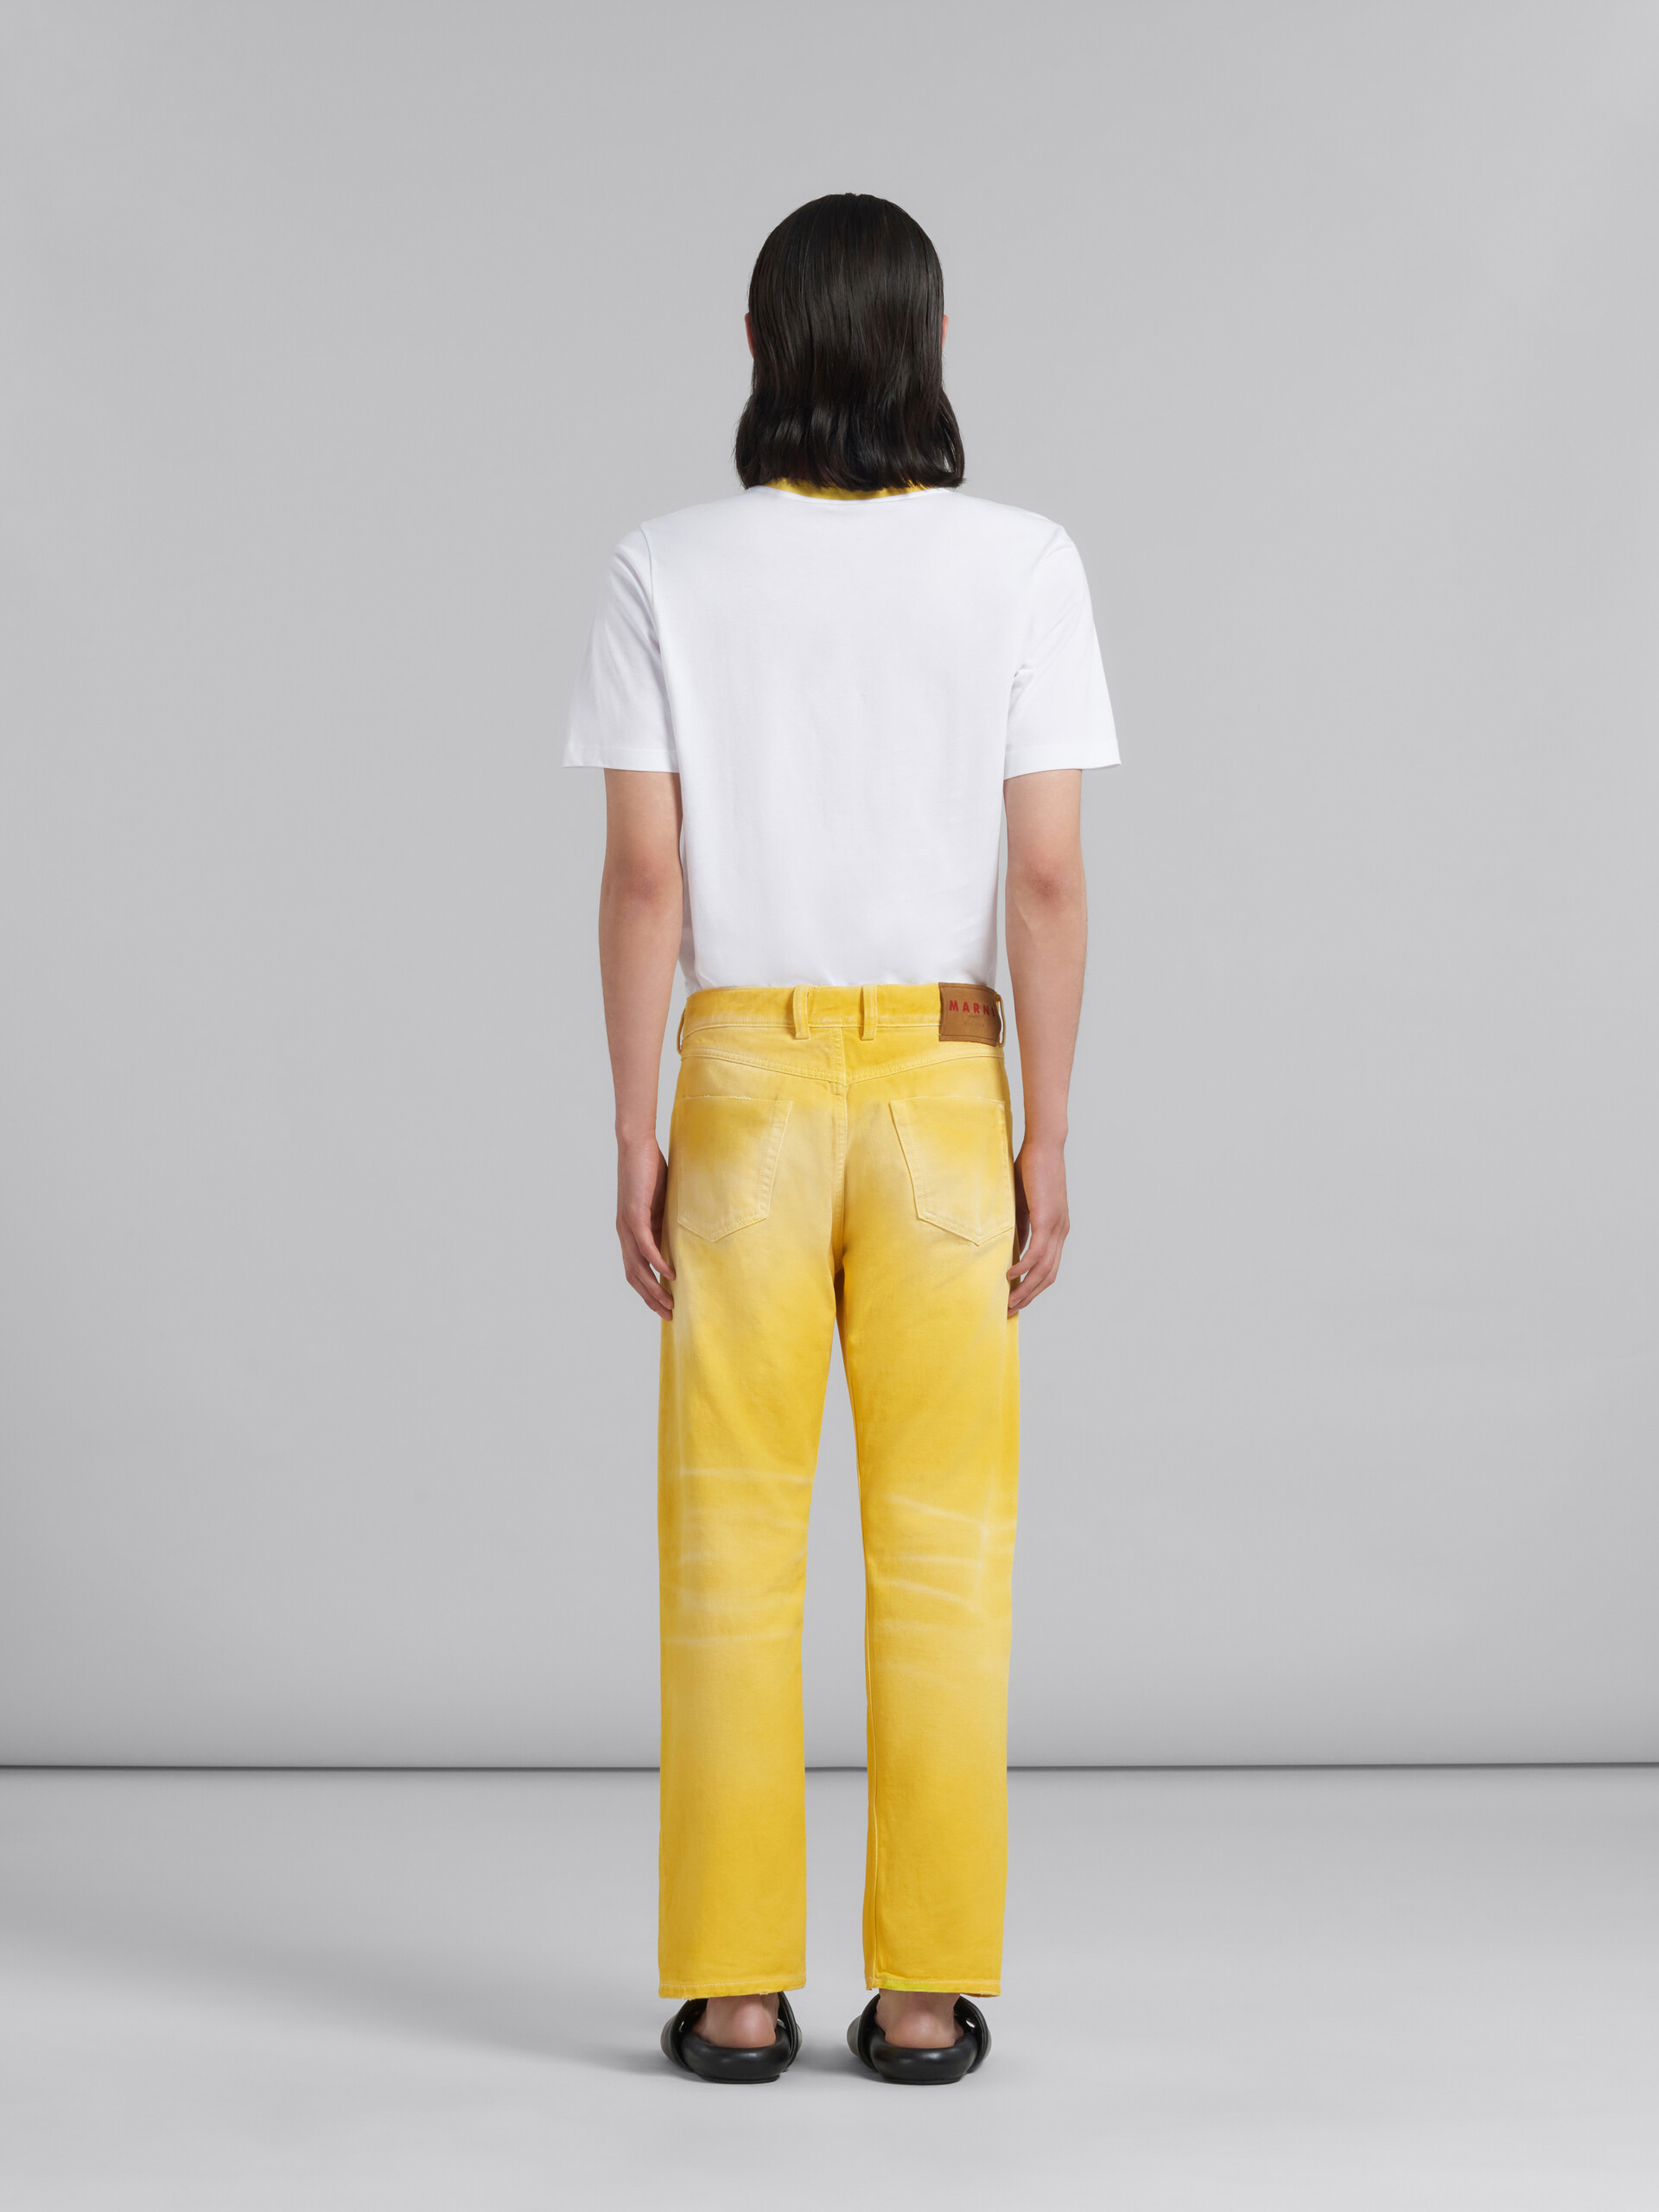 Pantalón de pernera recta amarillo de bull denim sobreteñido - Pantalones - Image 3